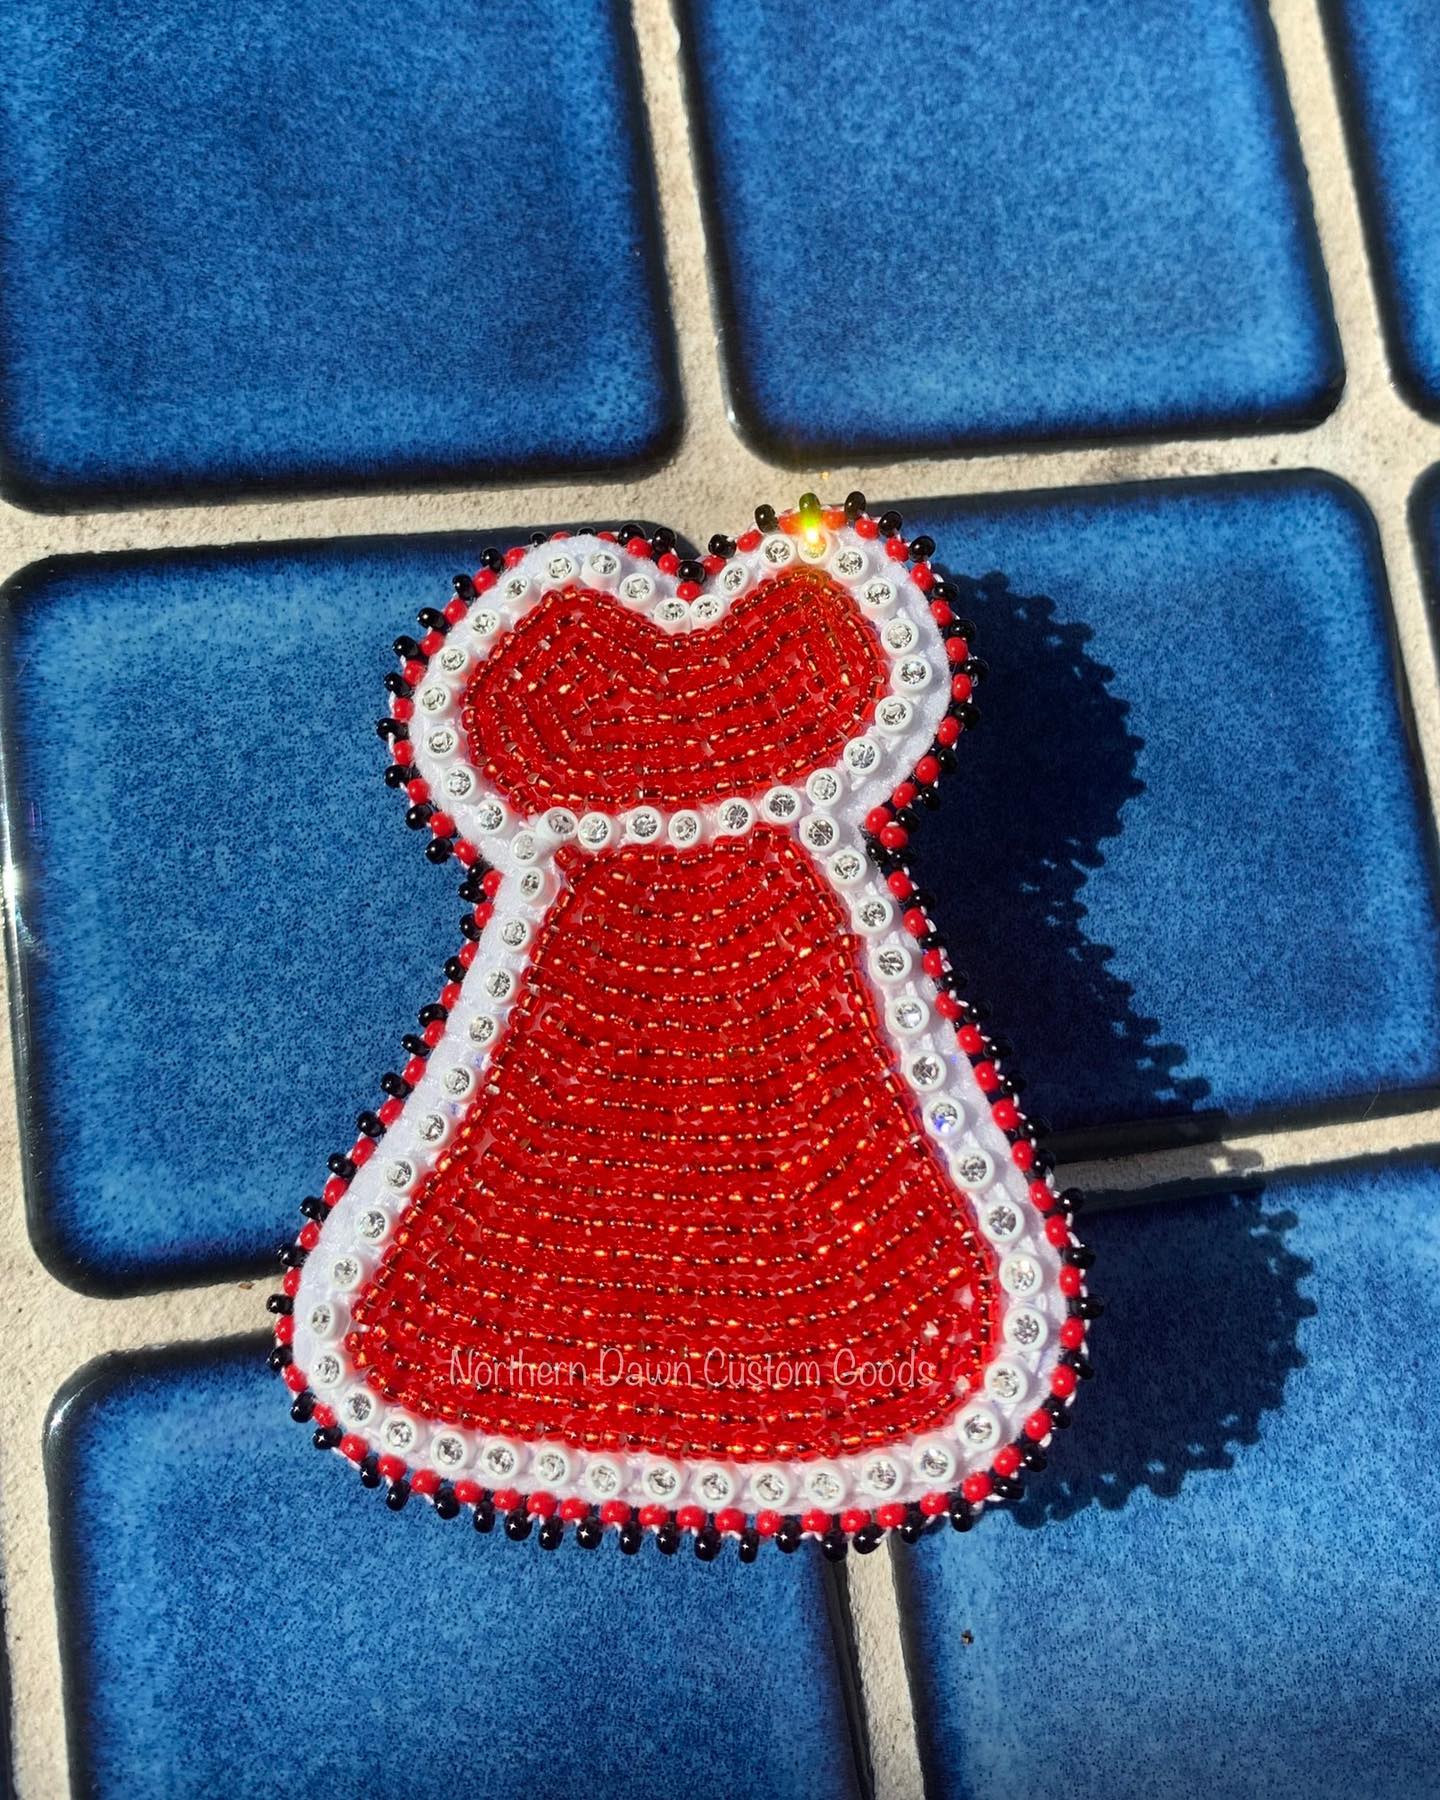 MMIWG Commemorative Red Dress Pin